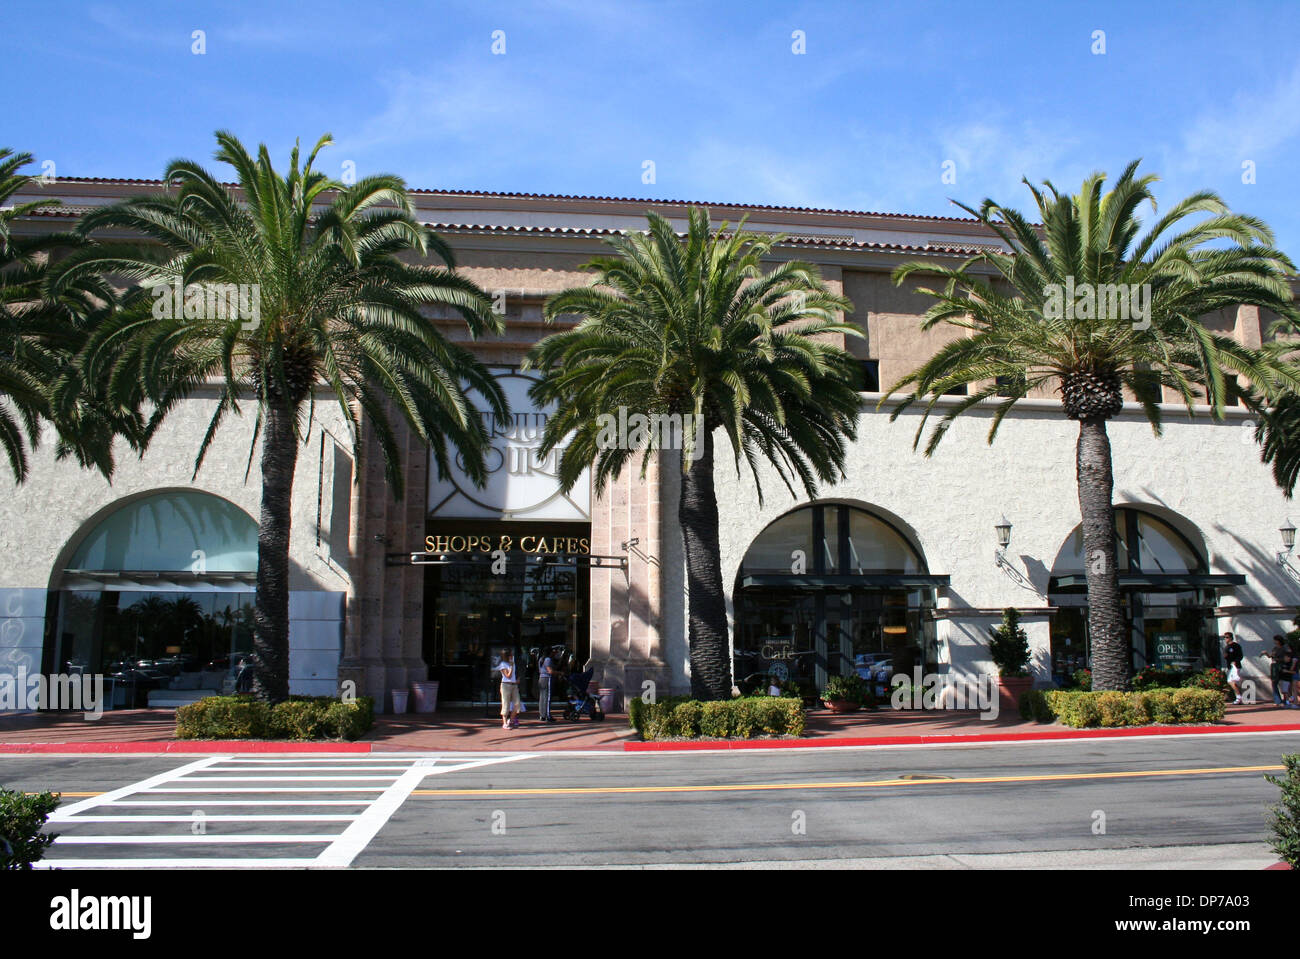 File:Perfect Day in Fashion Island, Newport Center, Newport Beach, Ca, USA  - panoramio (11).jpg - Wikimedia Commons